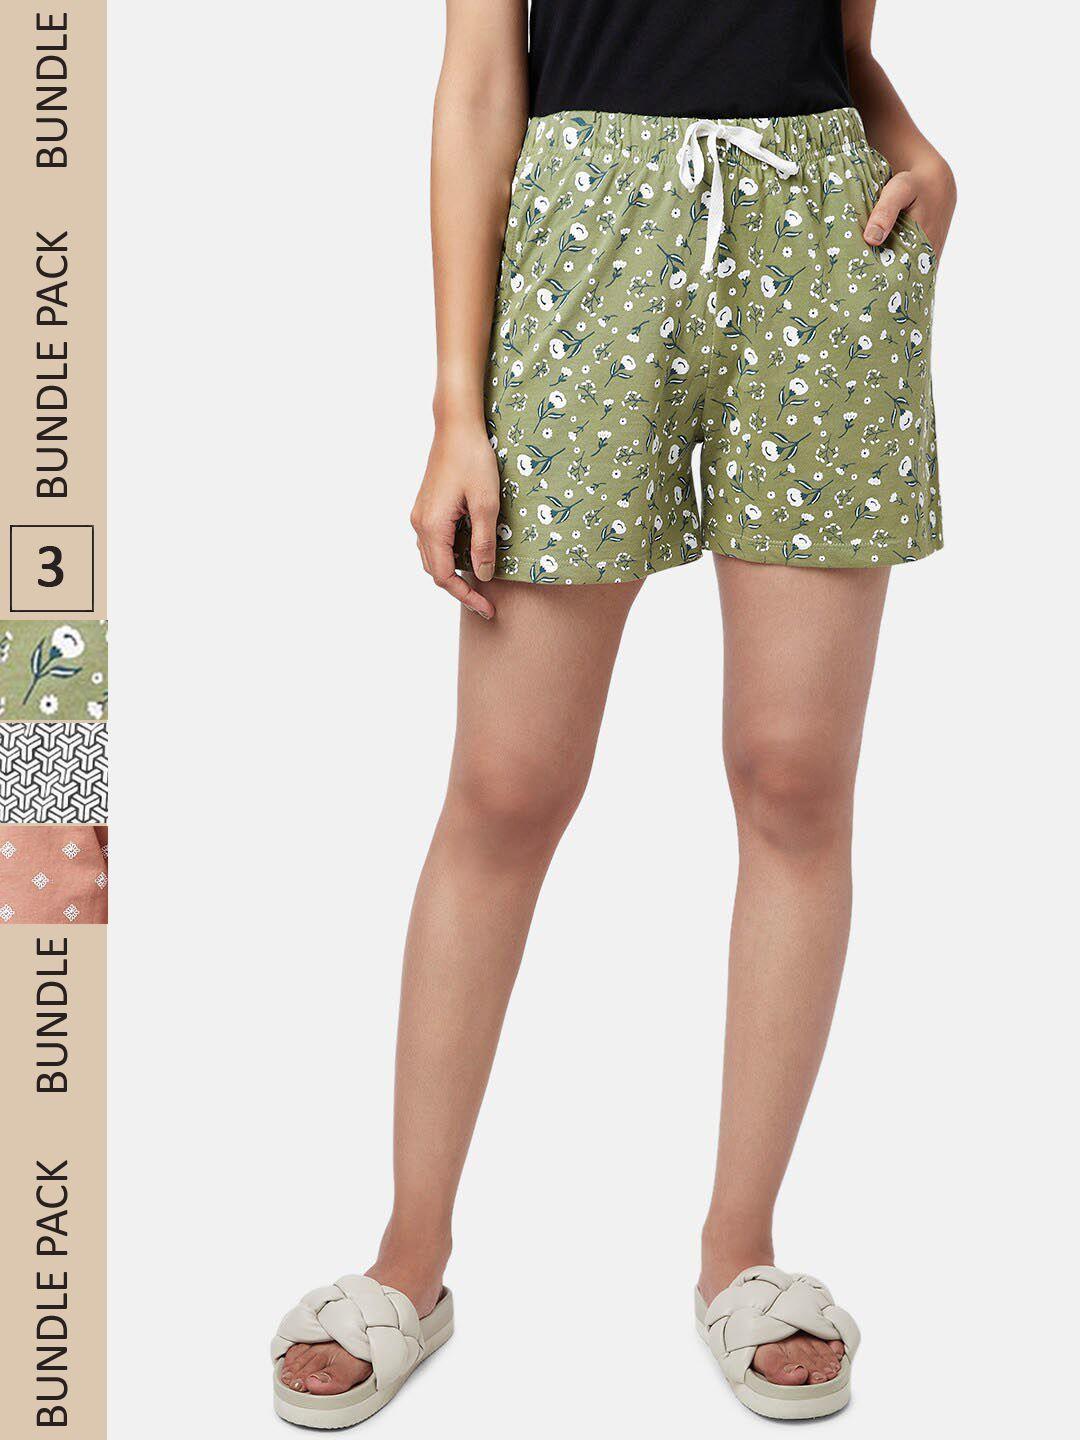 yu by pantaloons women green & pink pack of 3 printed lounge shorts